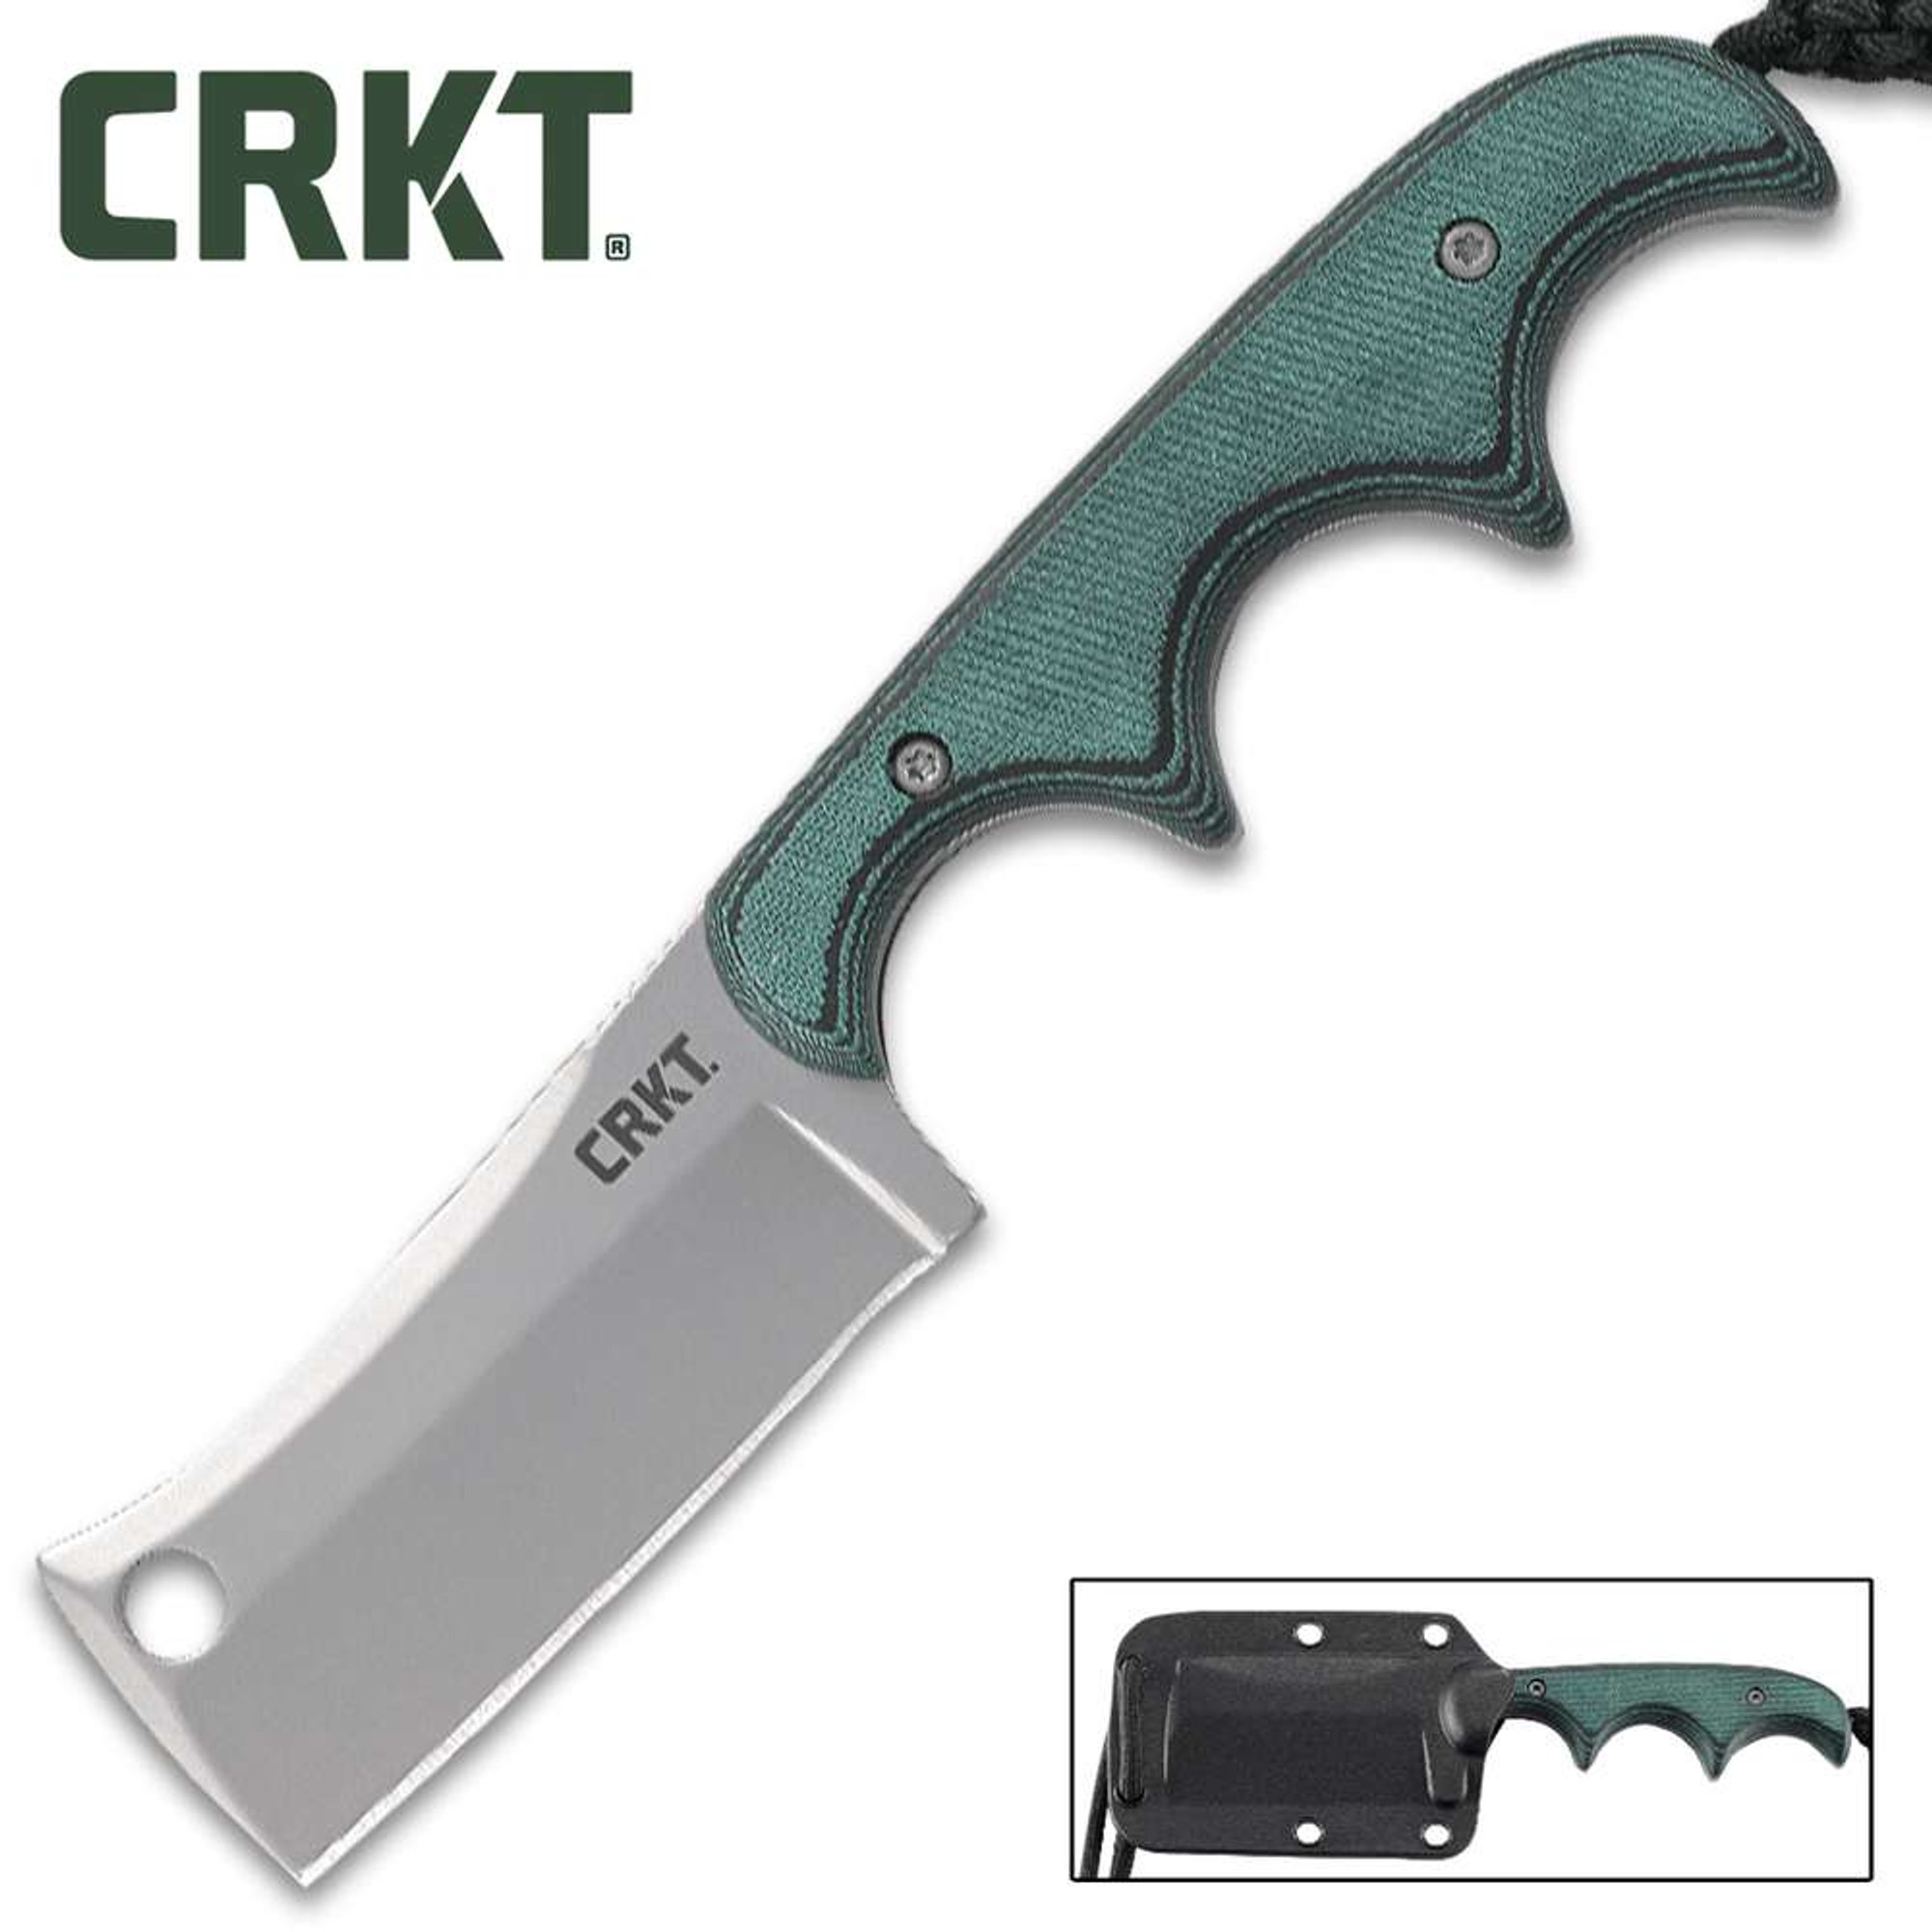 CRKT Minimalist Cleaver Knife With Sheath